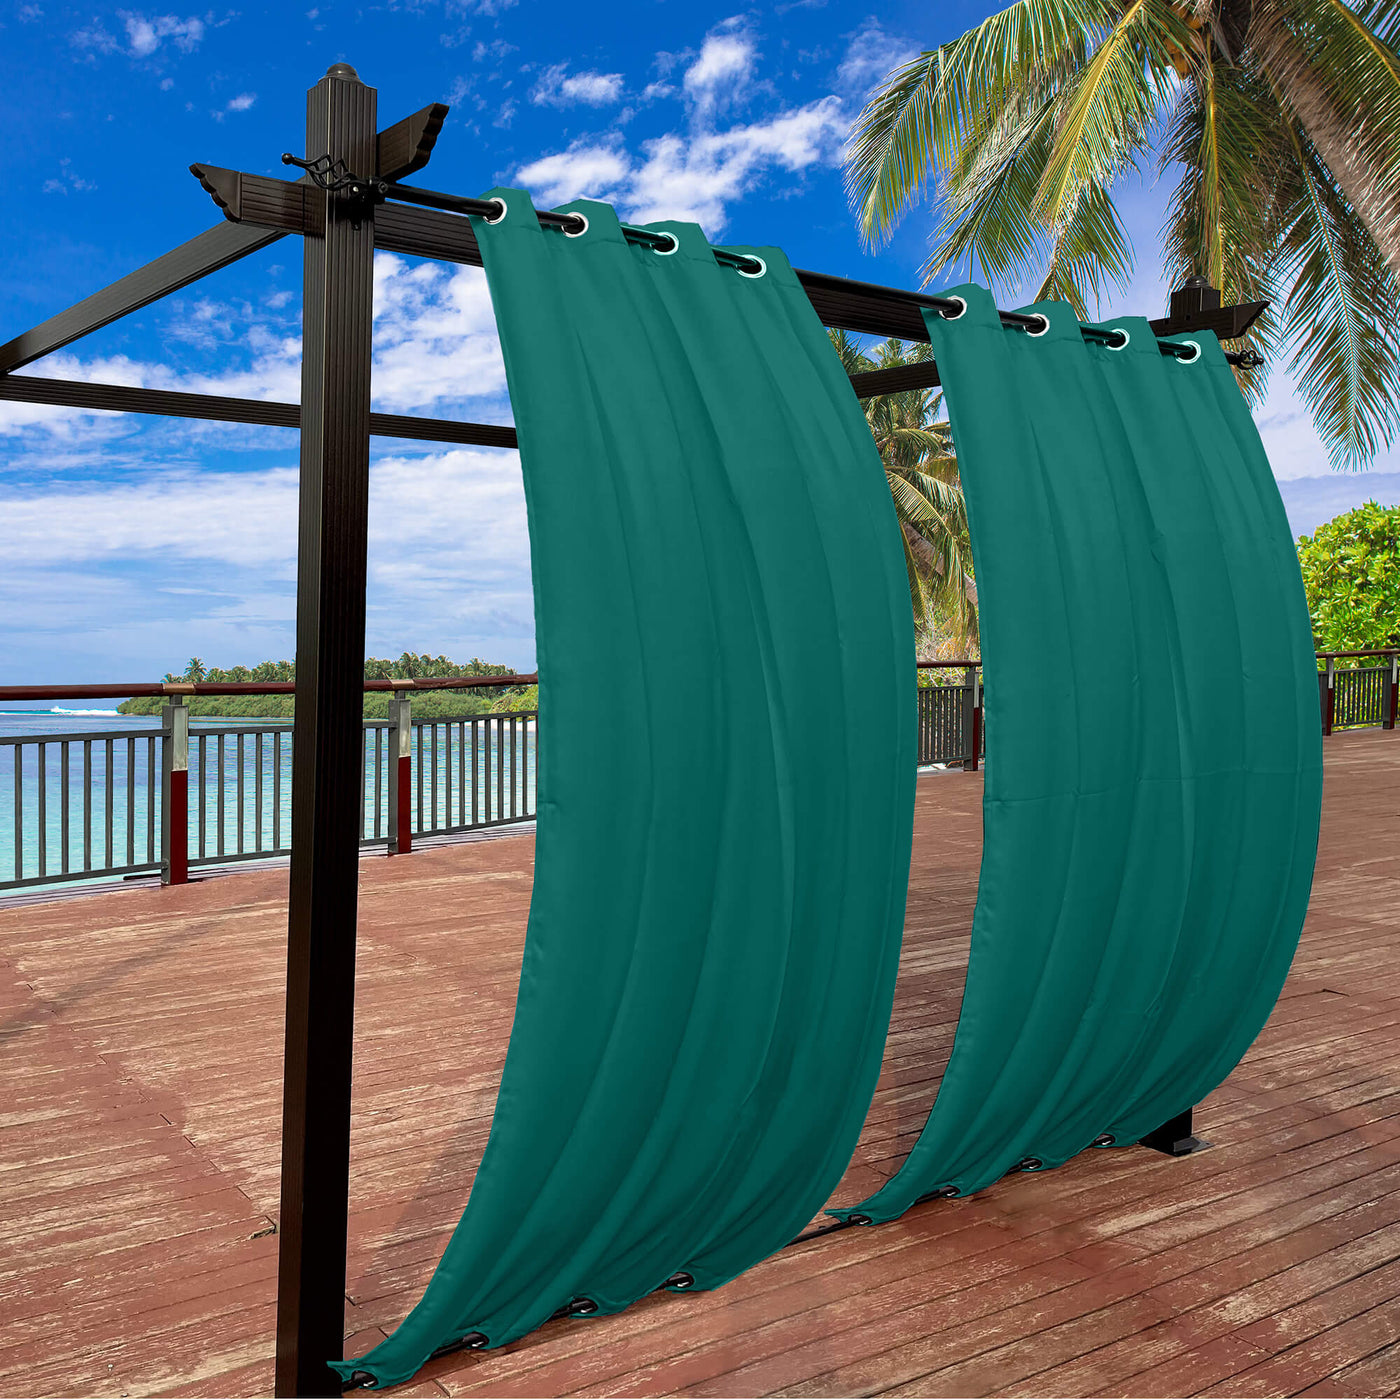 Outdoor Curtains Waterproof Grommet Top & Bottom 1 Panel - Forest Green